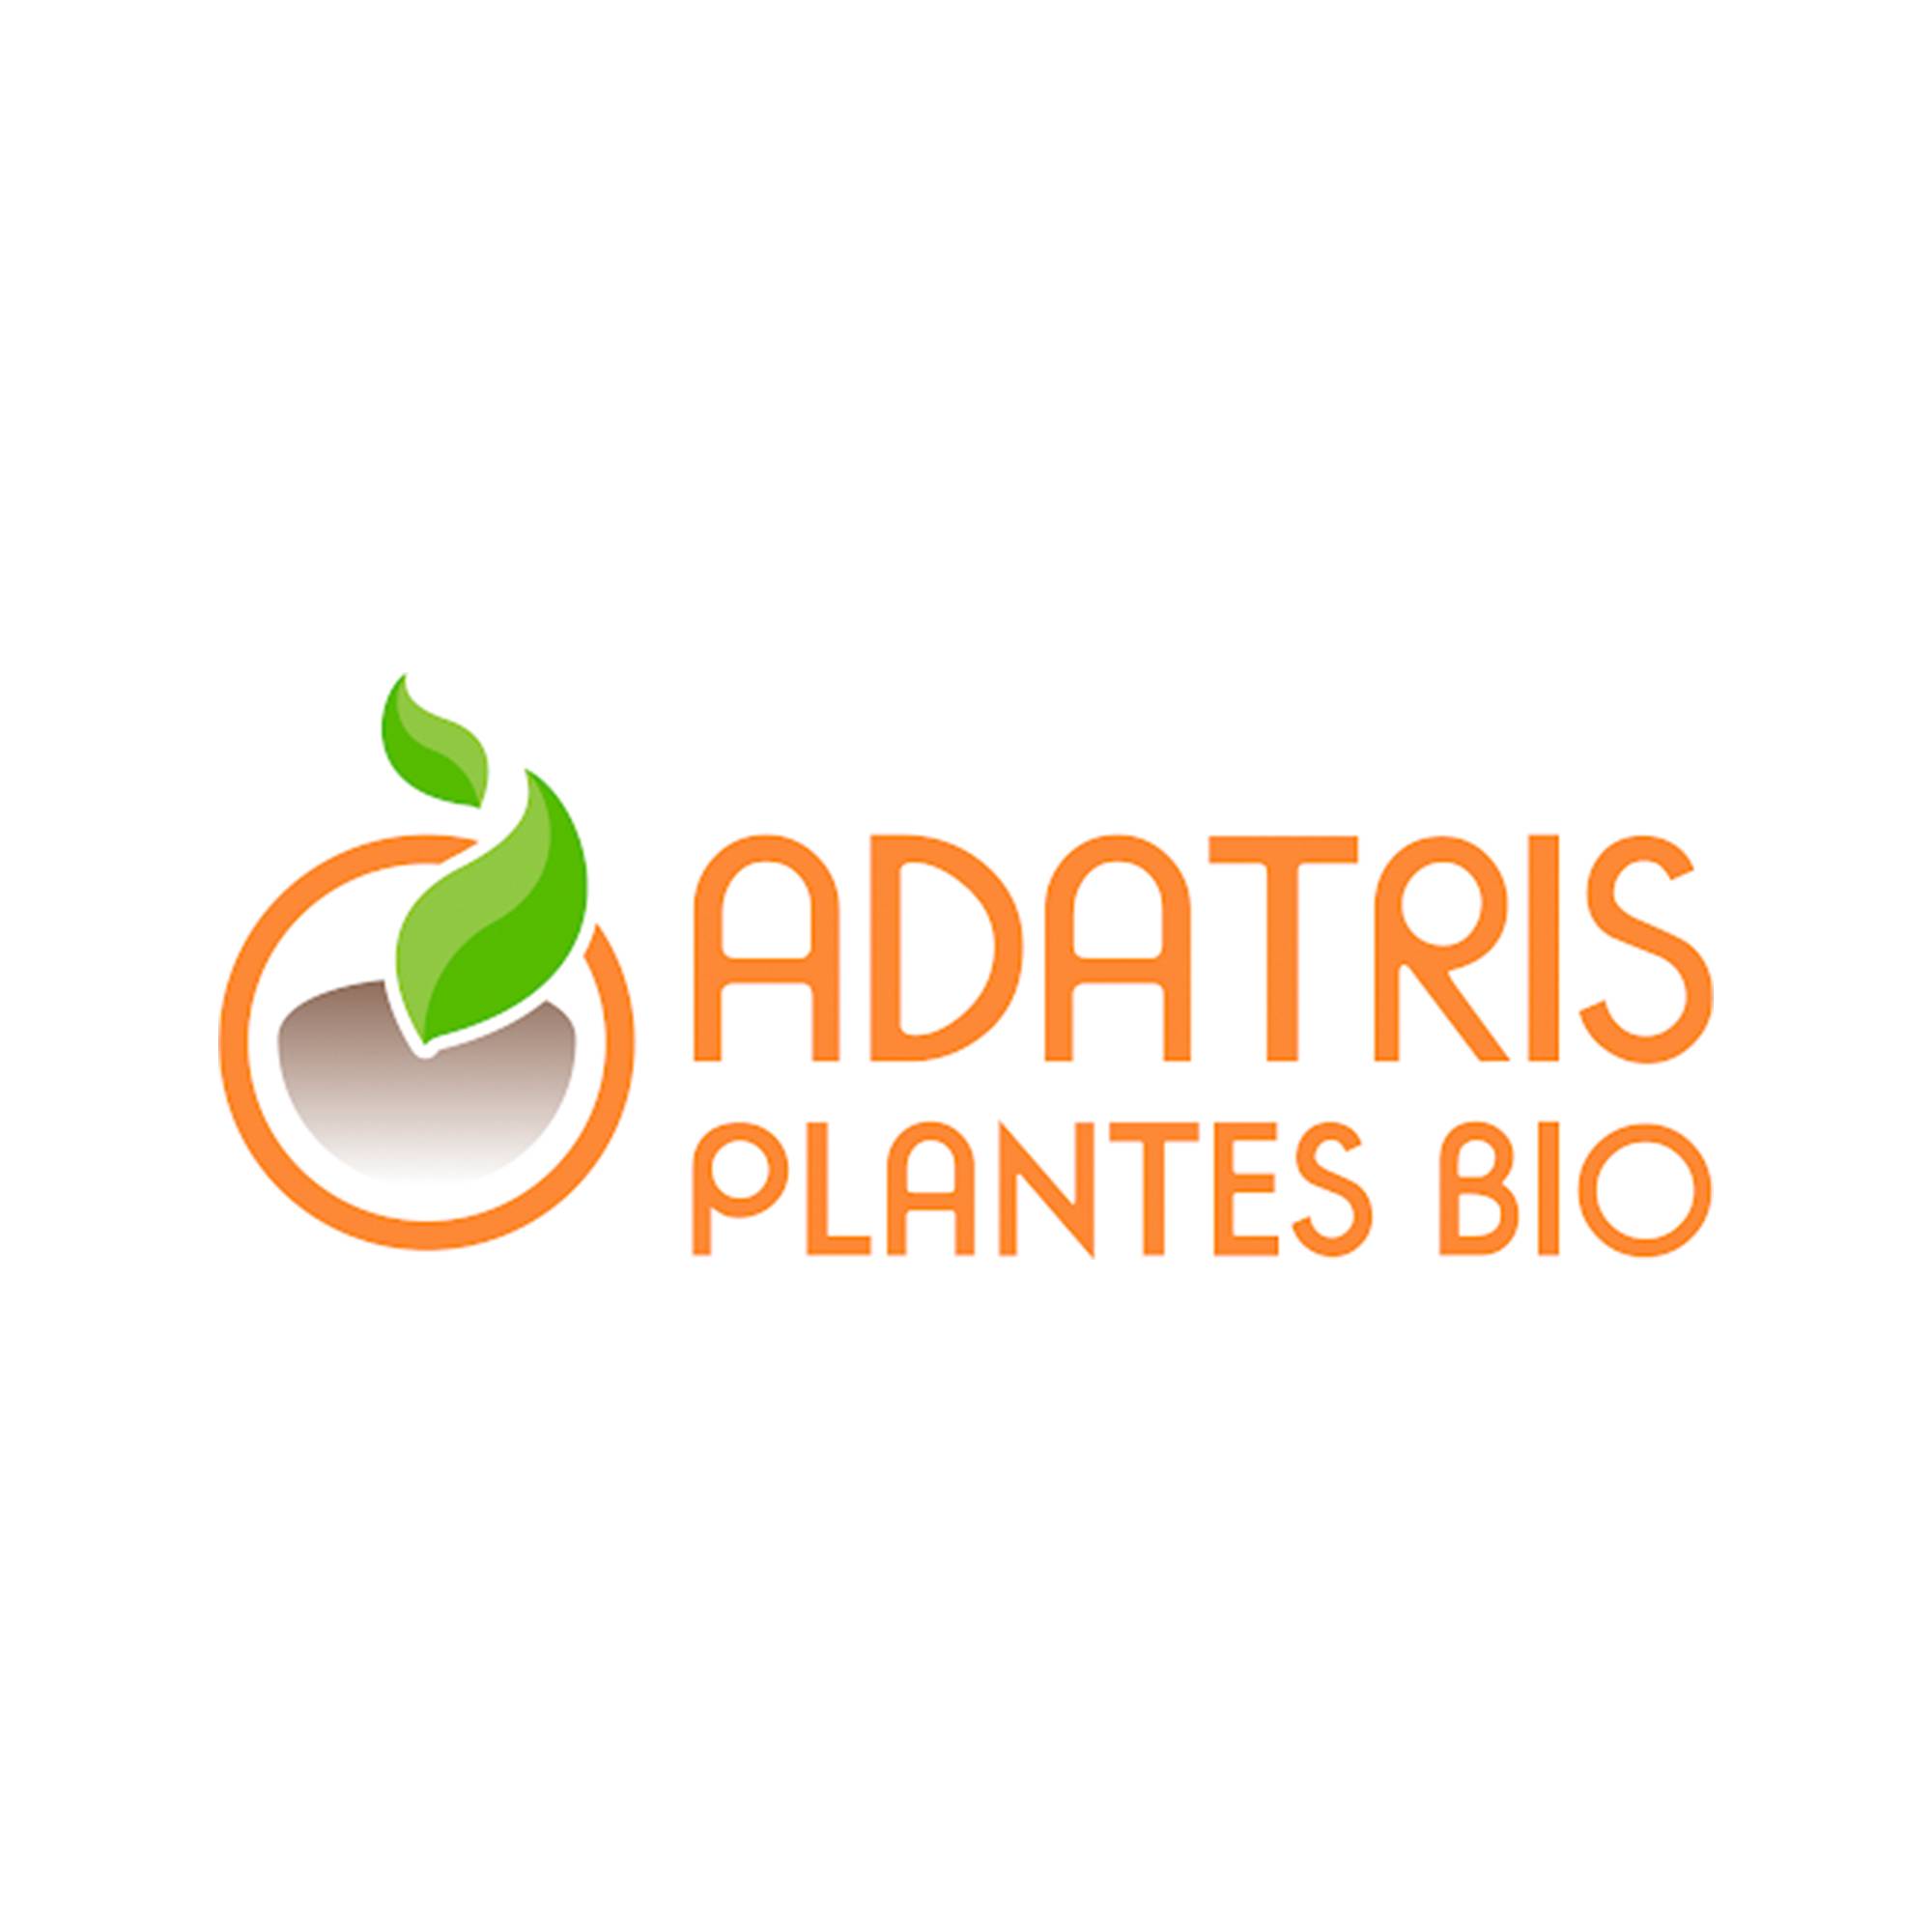 Logo Adatris